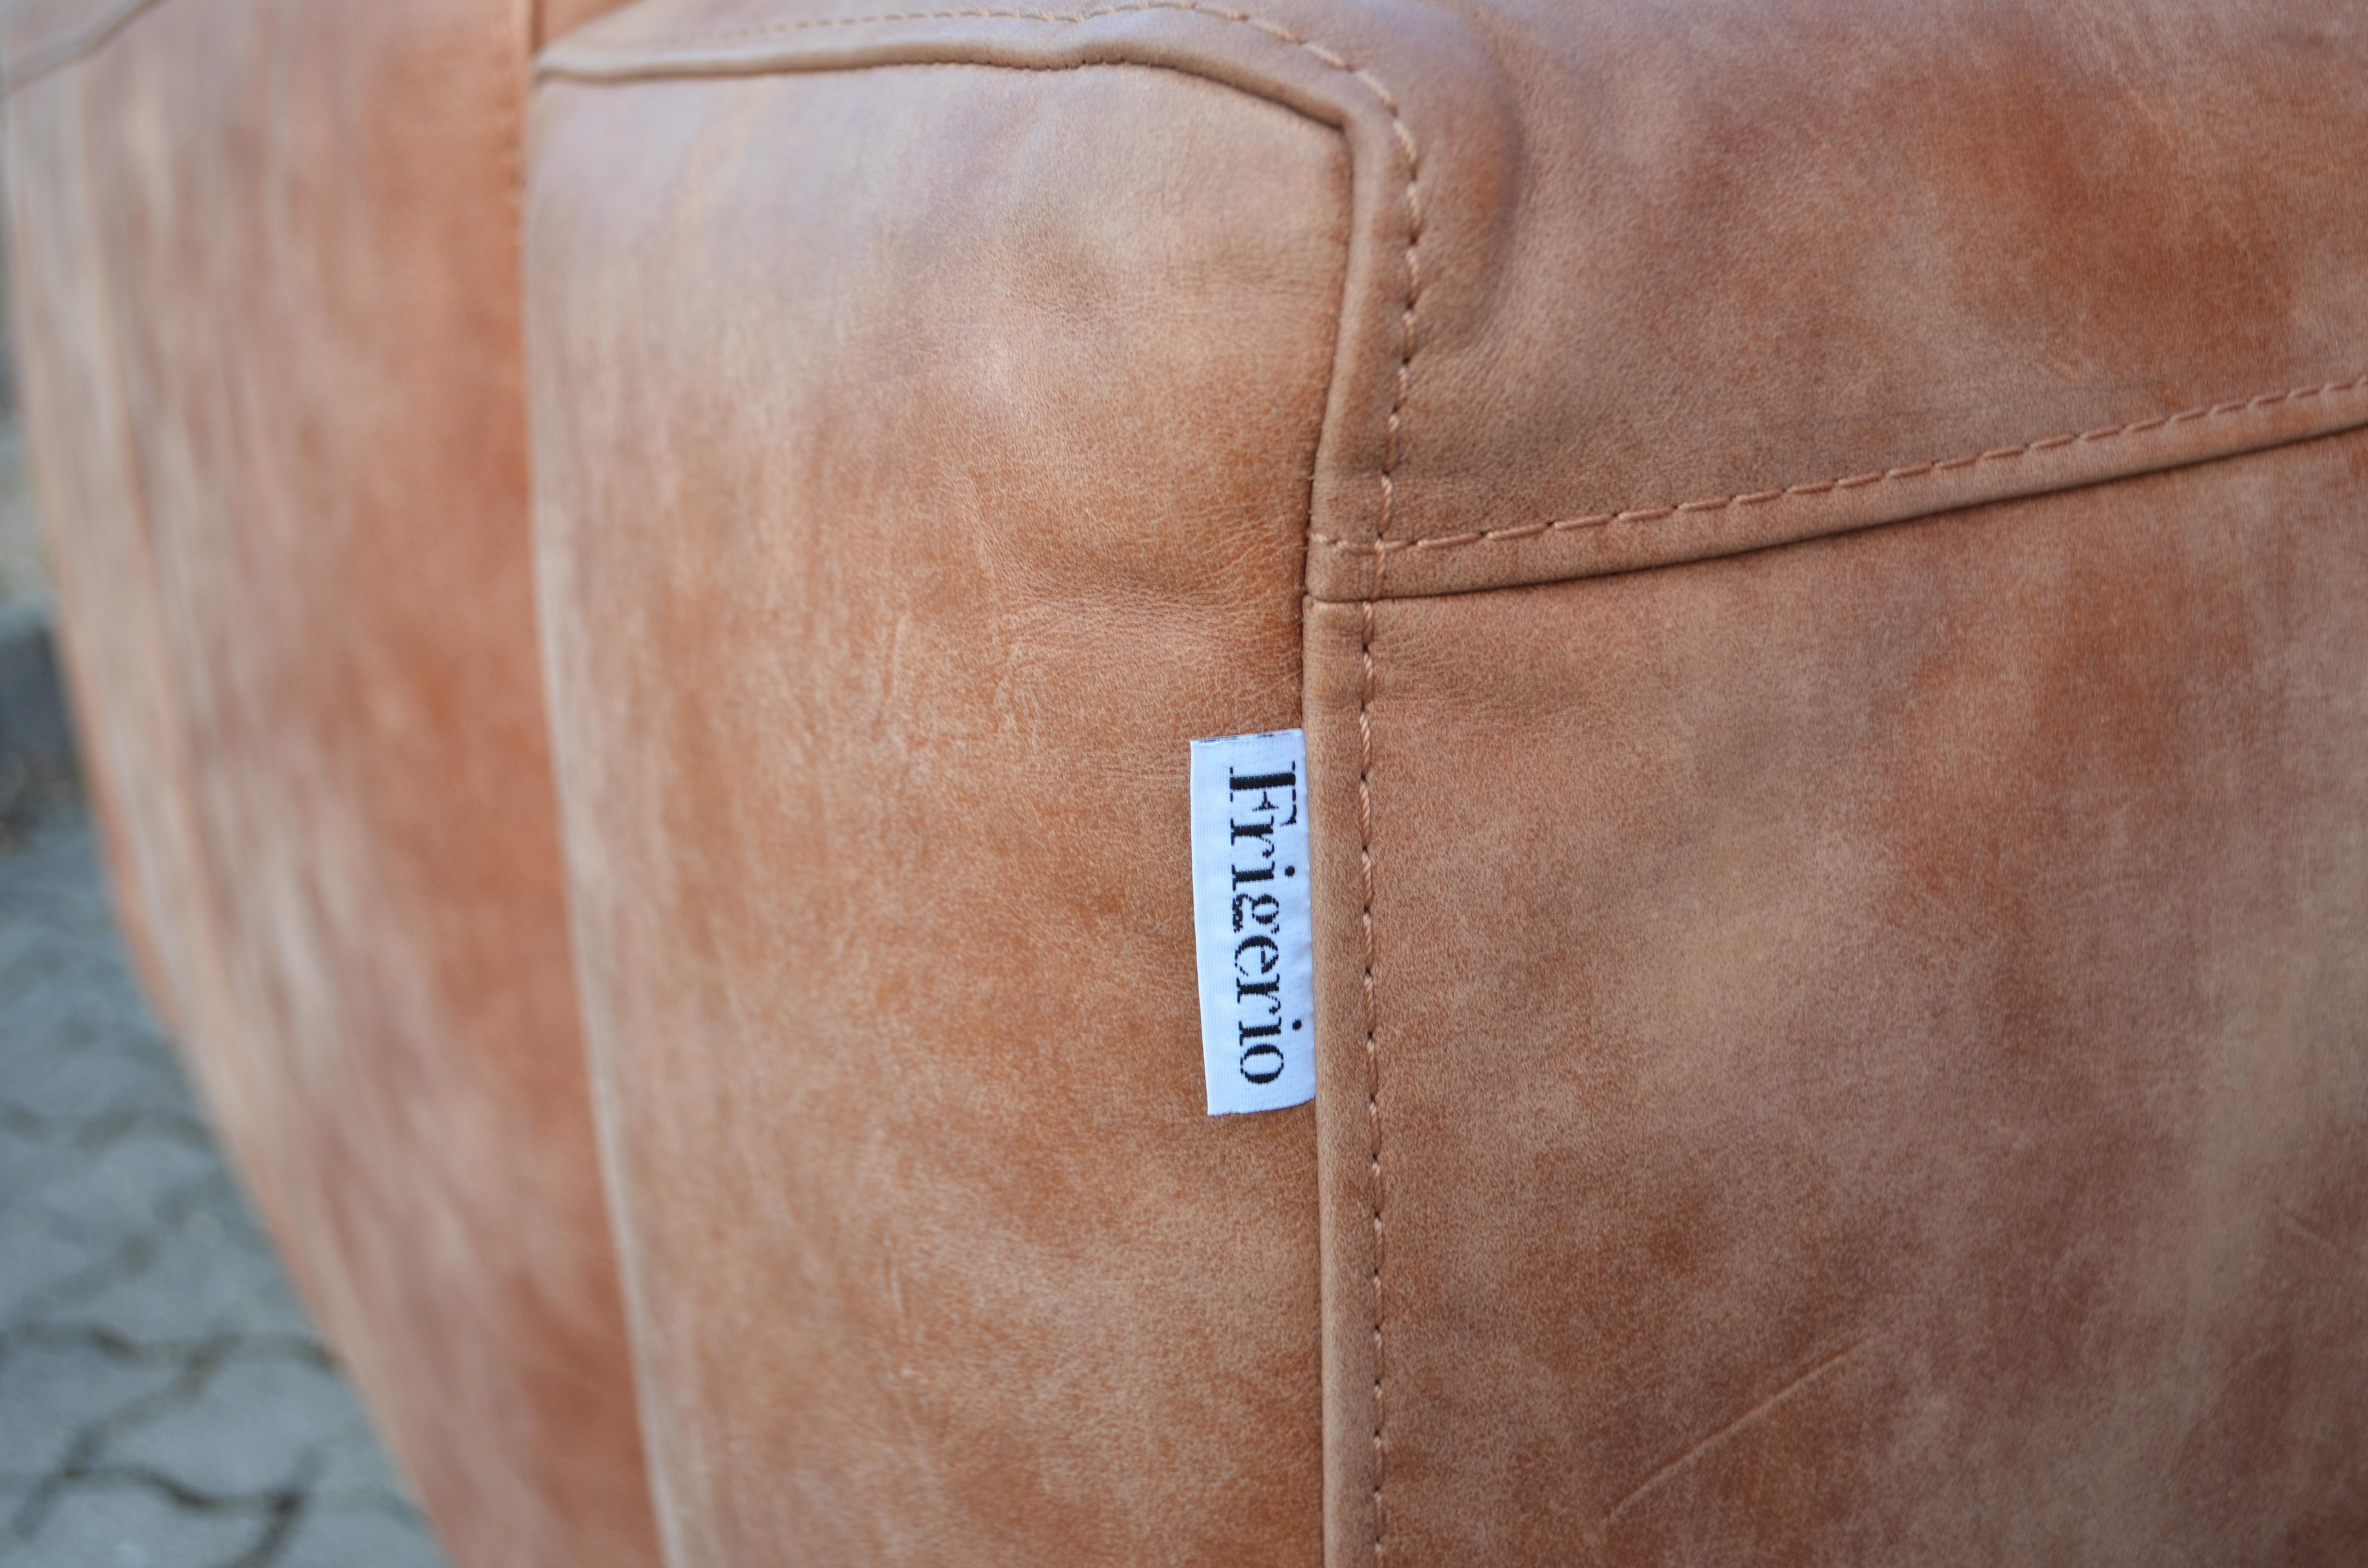 Frigerio Salotti Modell Cooper Loveseat Armchair Leather Chair Cognac Set of 2 5